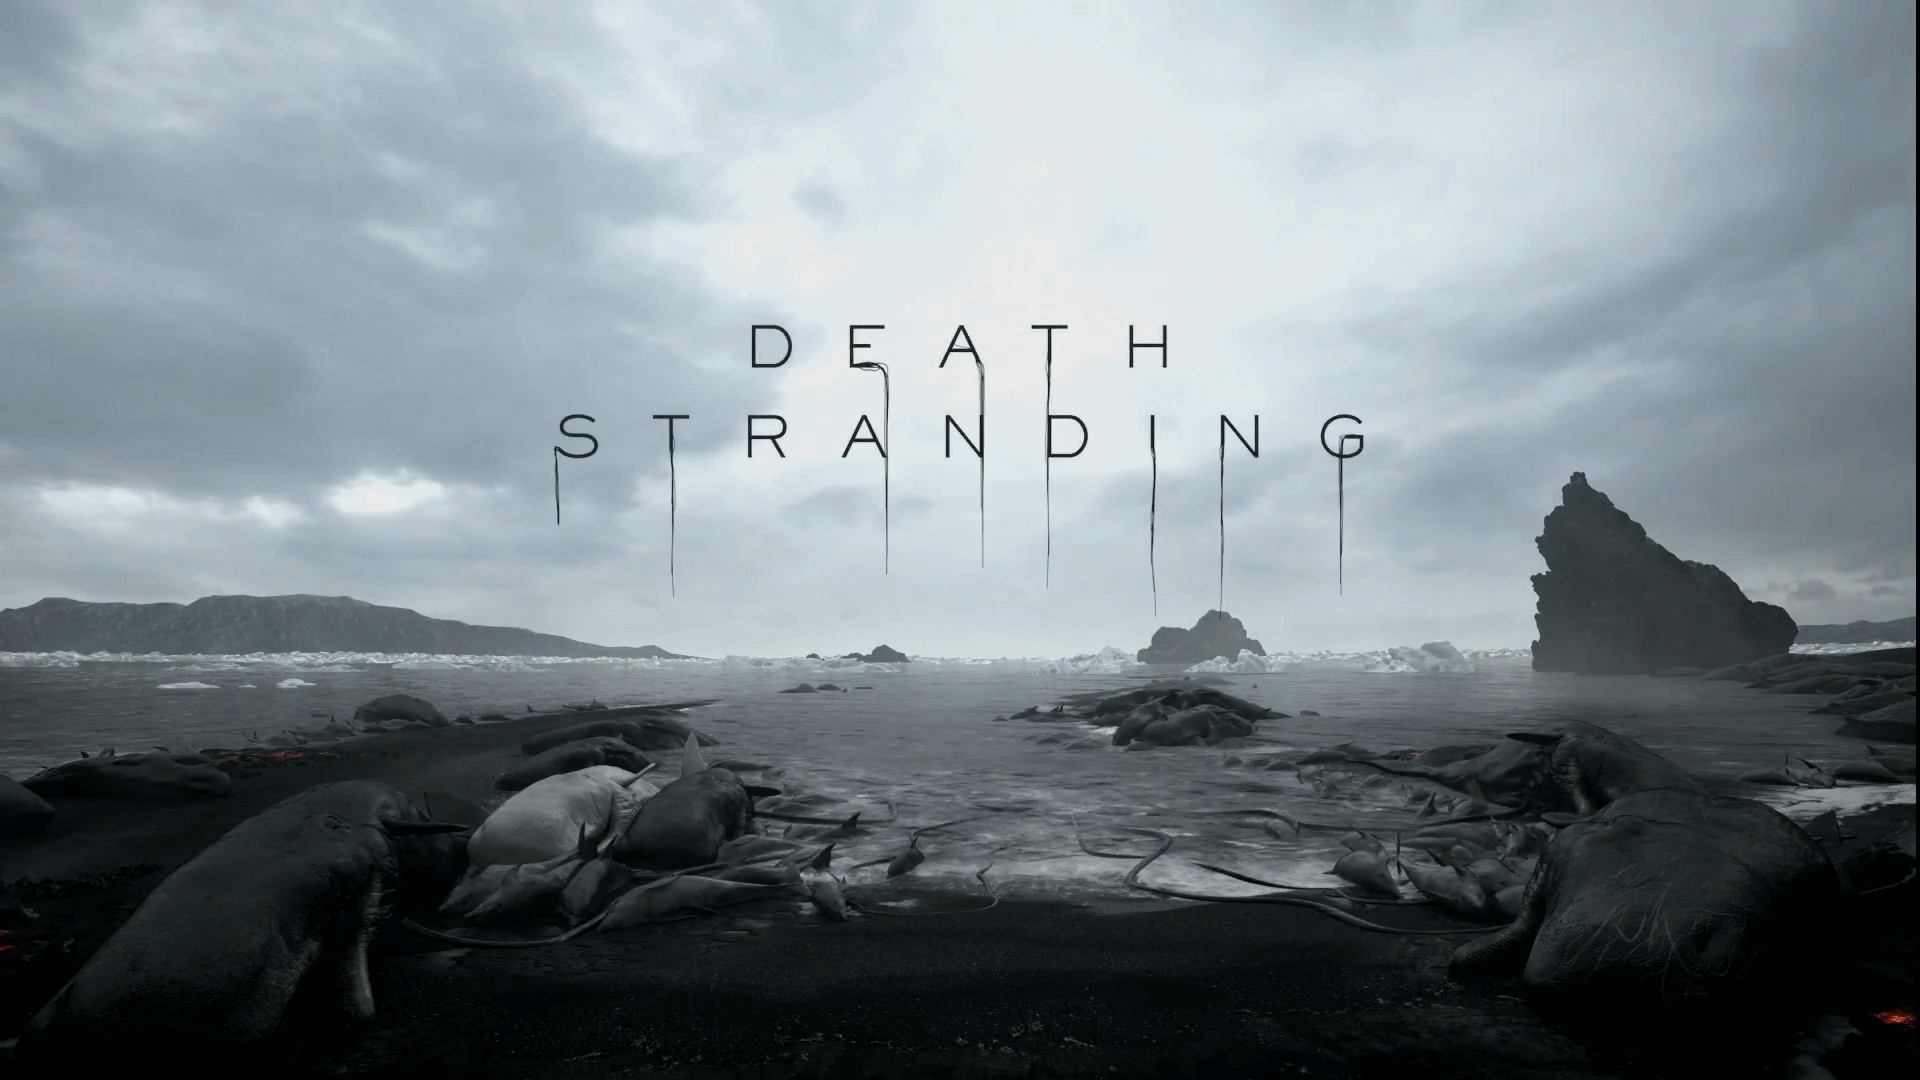 Death Stranding เตรียมลง PC ในช่วงฤดูร้อน 2020